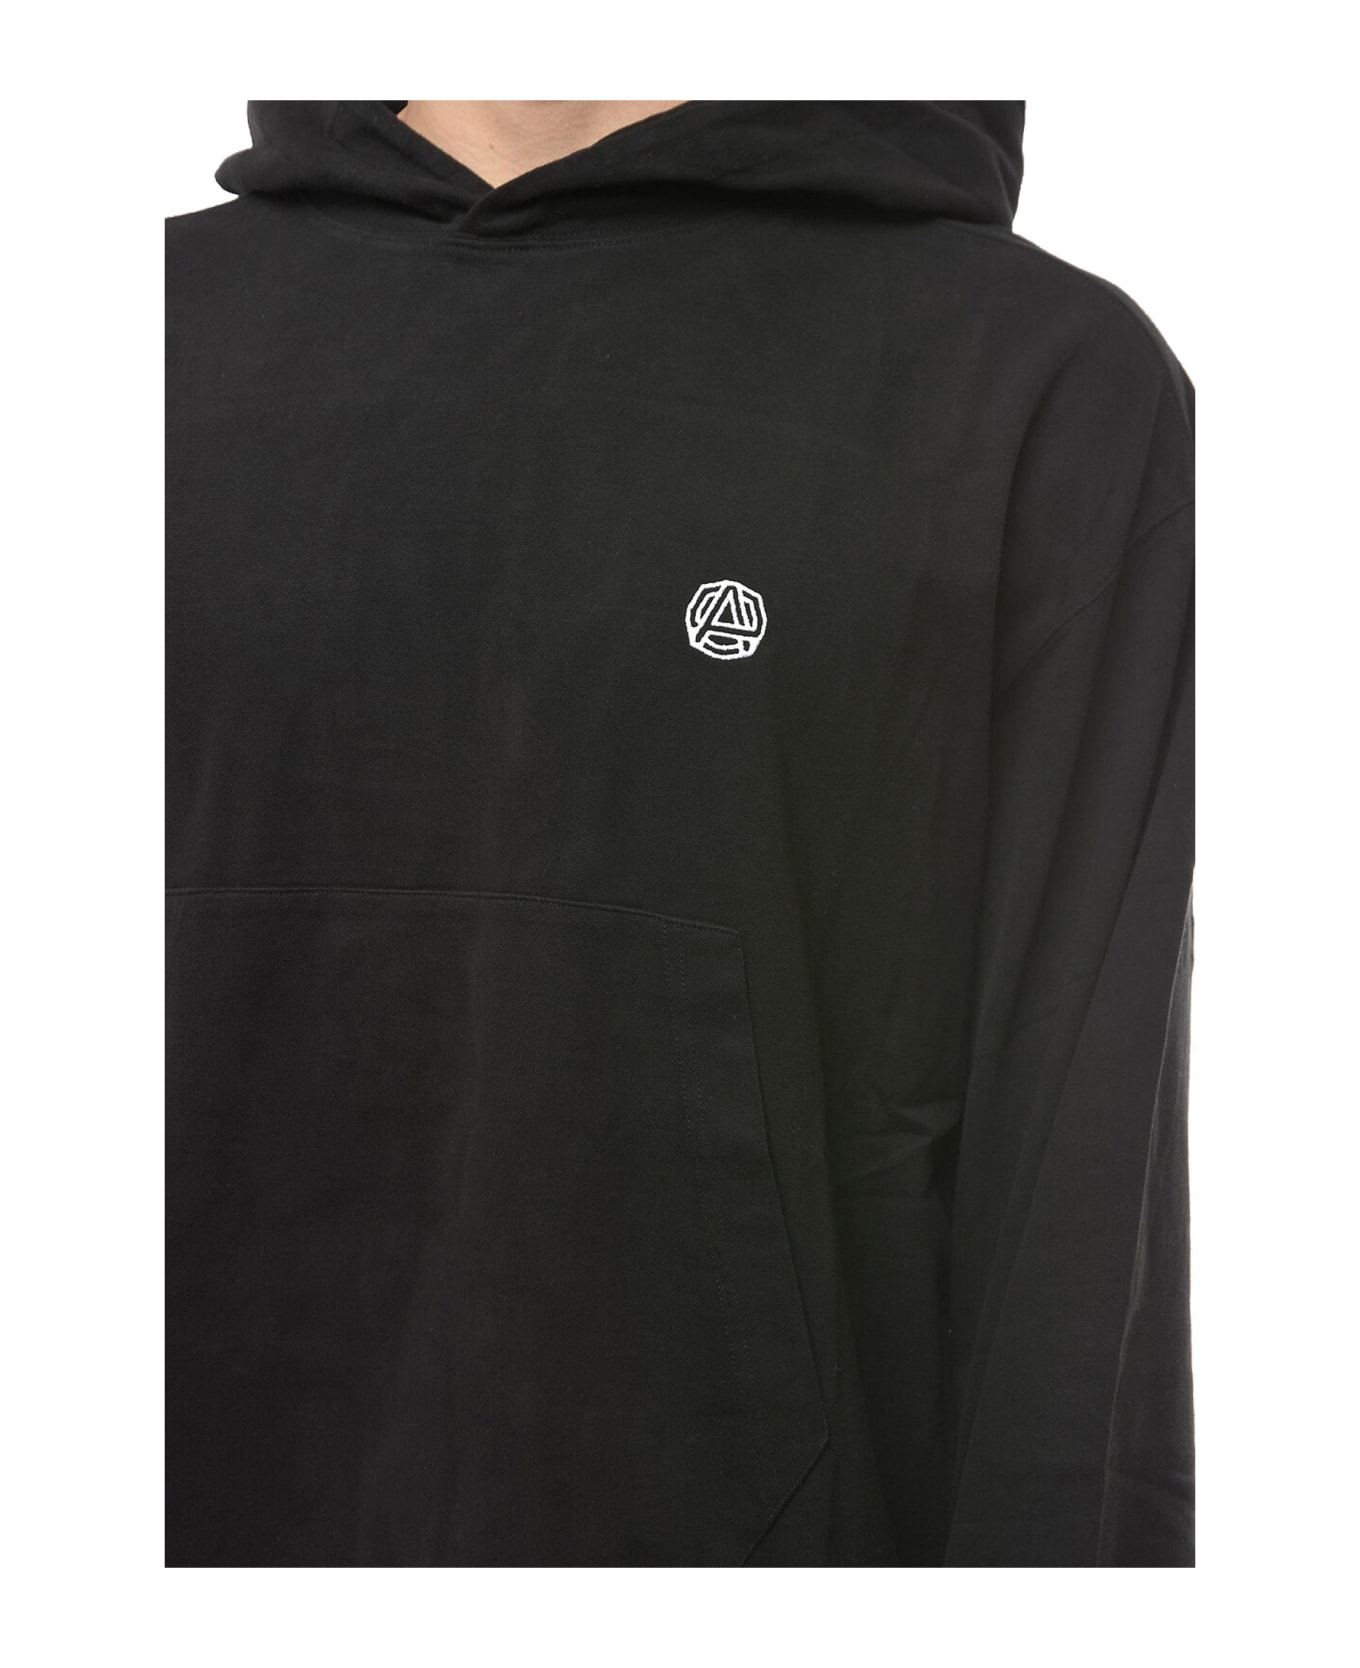 AMBUSH Hooded Sweatshirt - Black